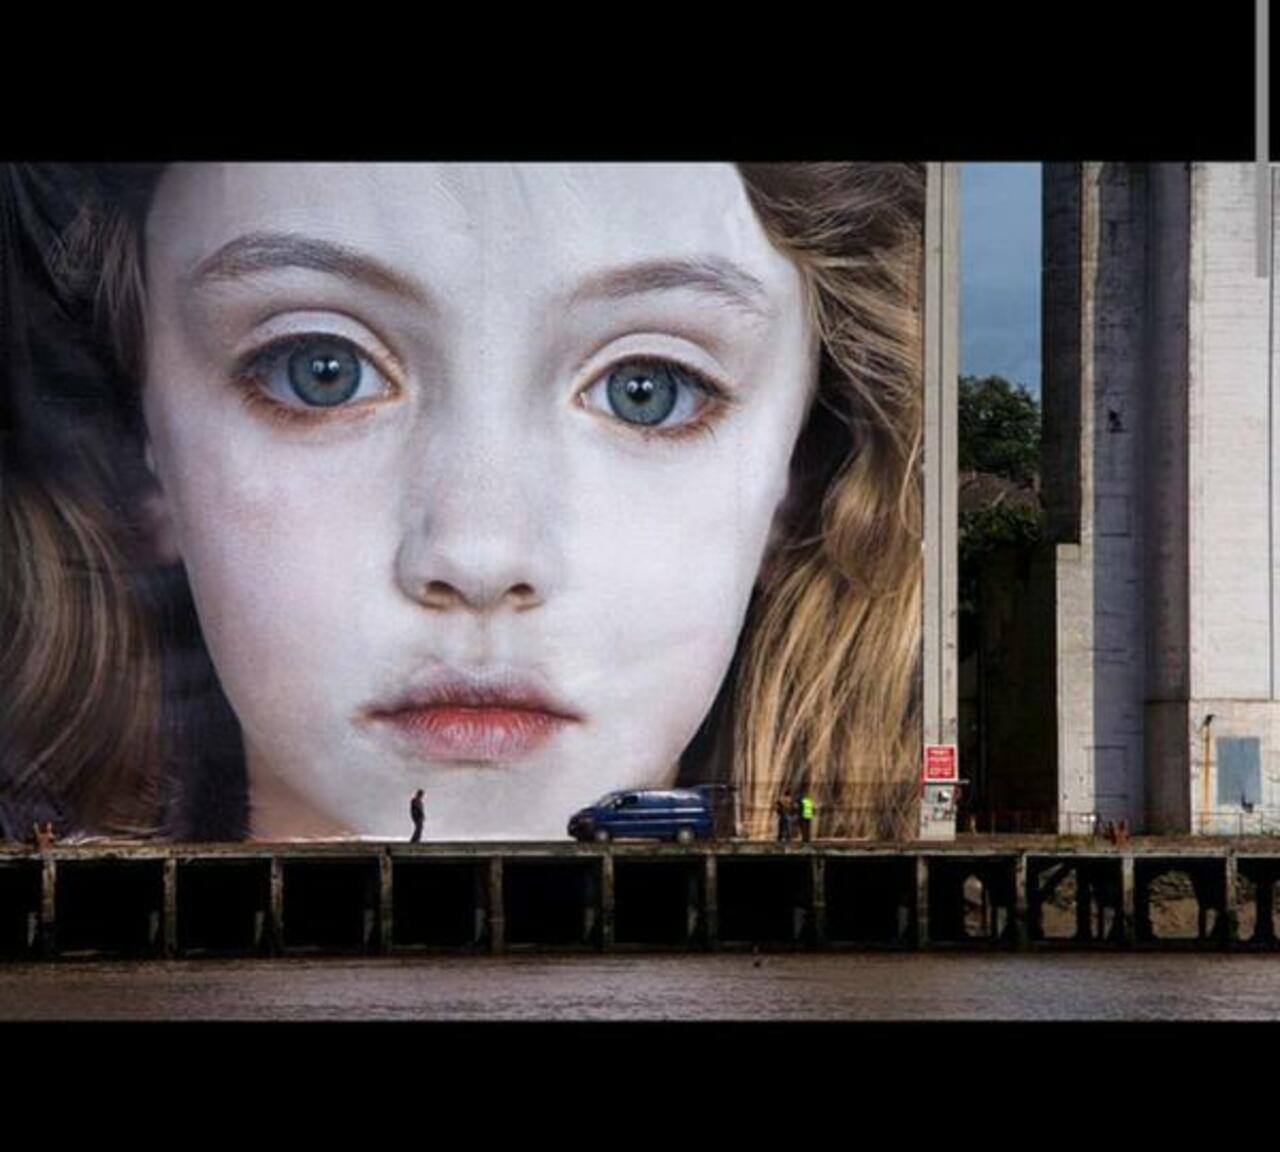 RT @upbyartists: Gottfried Helnwein
#streetart #art #graffiti #illustrator http://t.co/mJNzVCcUJg